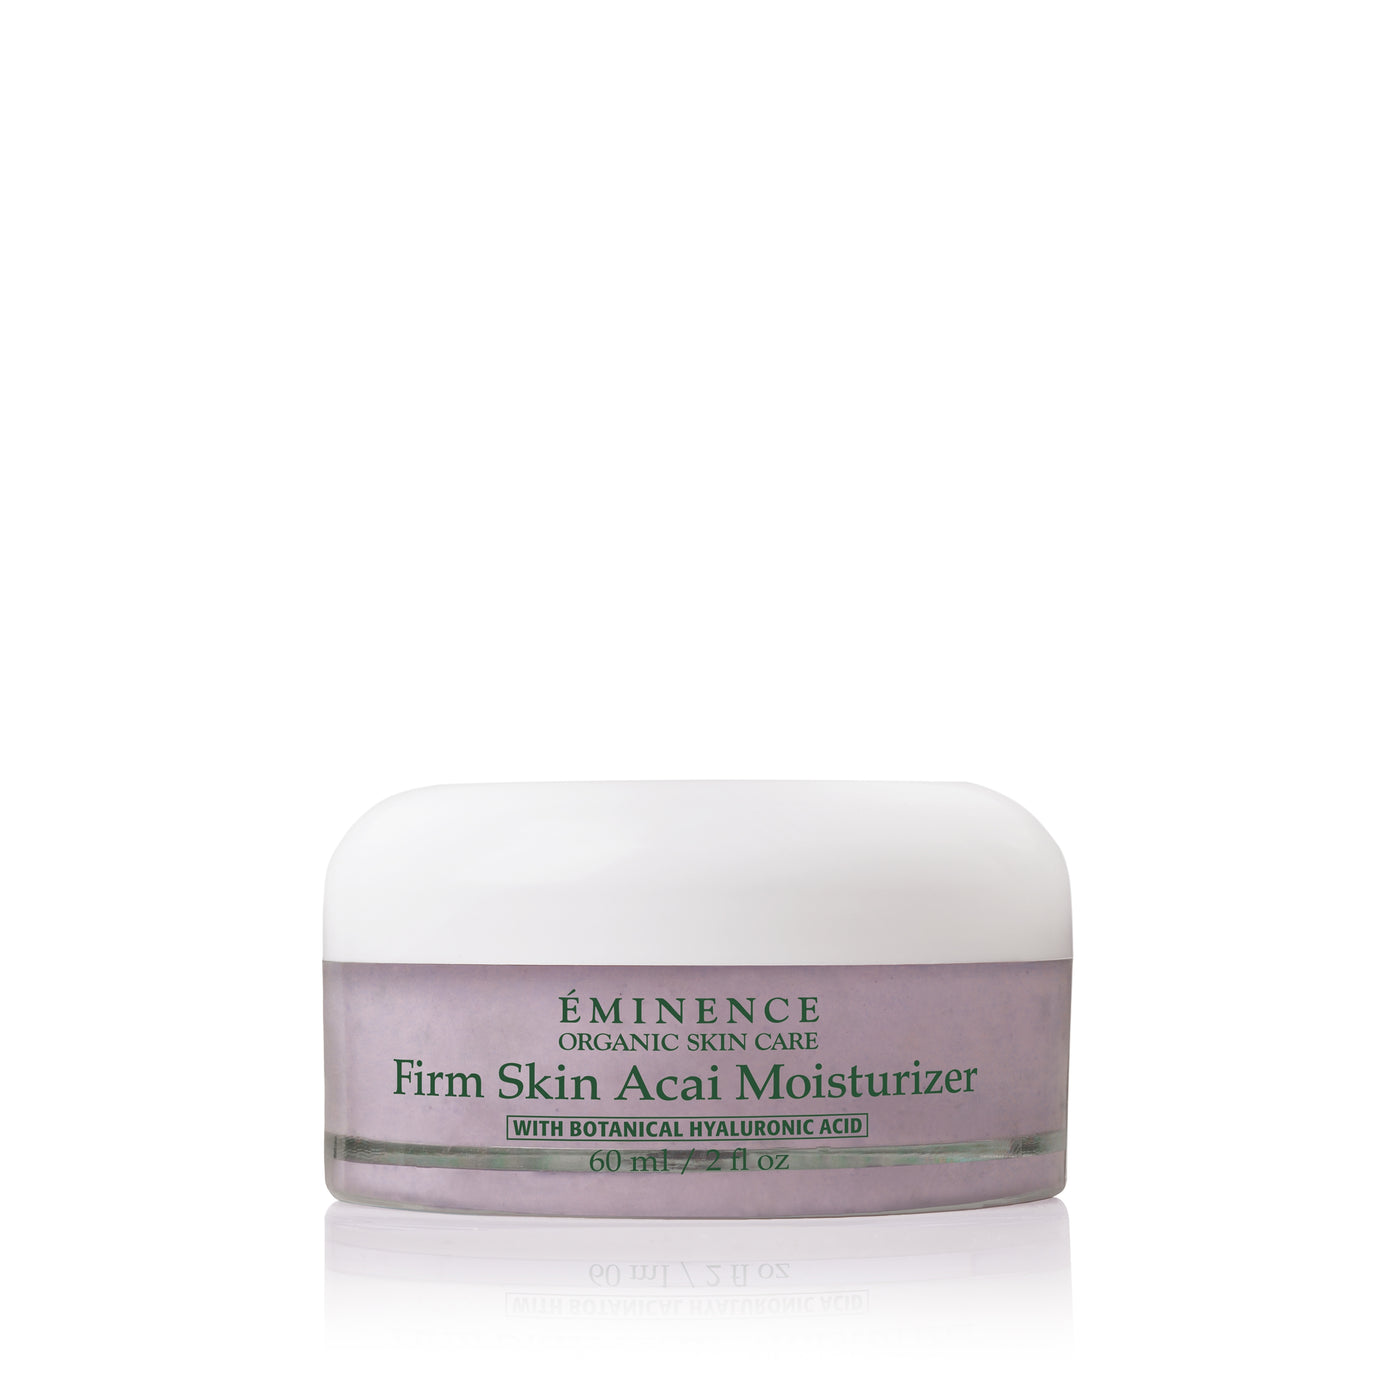 Eminence Organics Firm Skin Acai Moisturizer - Radiance Clean Beauty